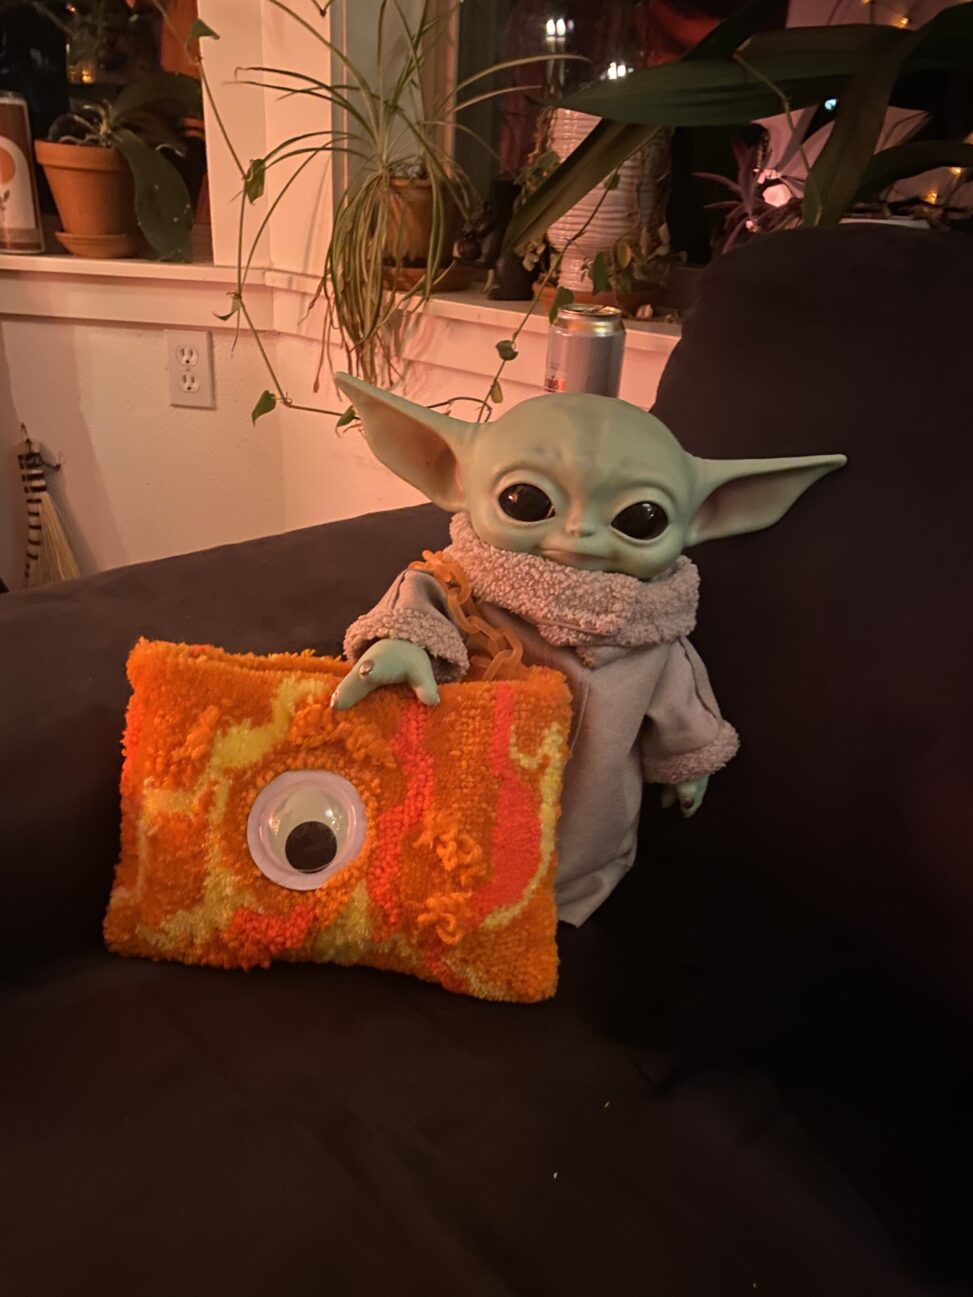 Baby Yoda doll holding an orange purse with an eyeball on it.